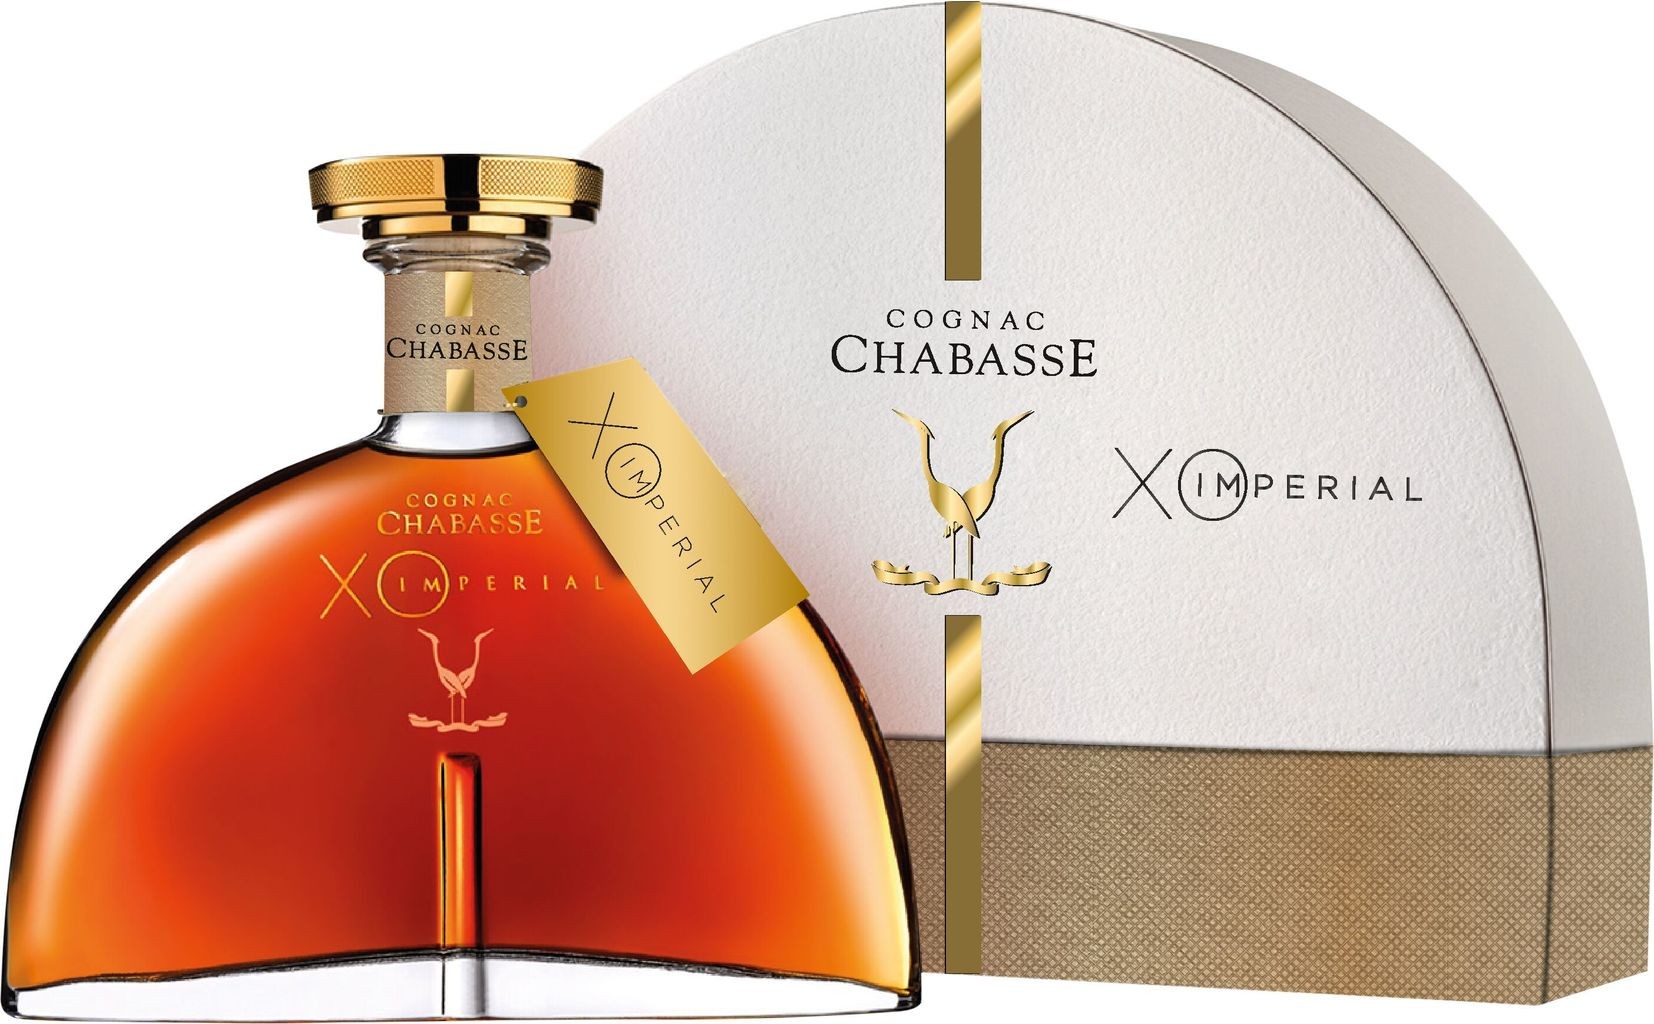 Cognac Chabasse XO Impérial in GP Cognac Chabasse Cognac